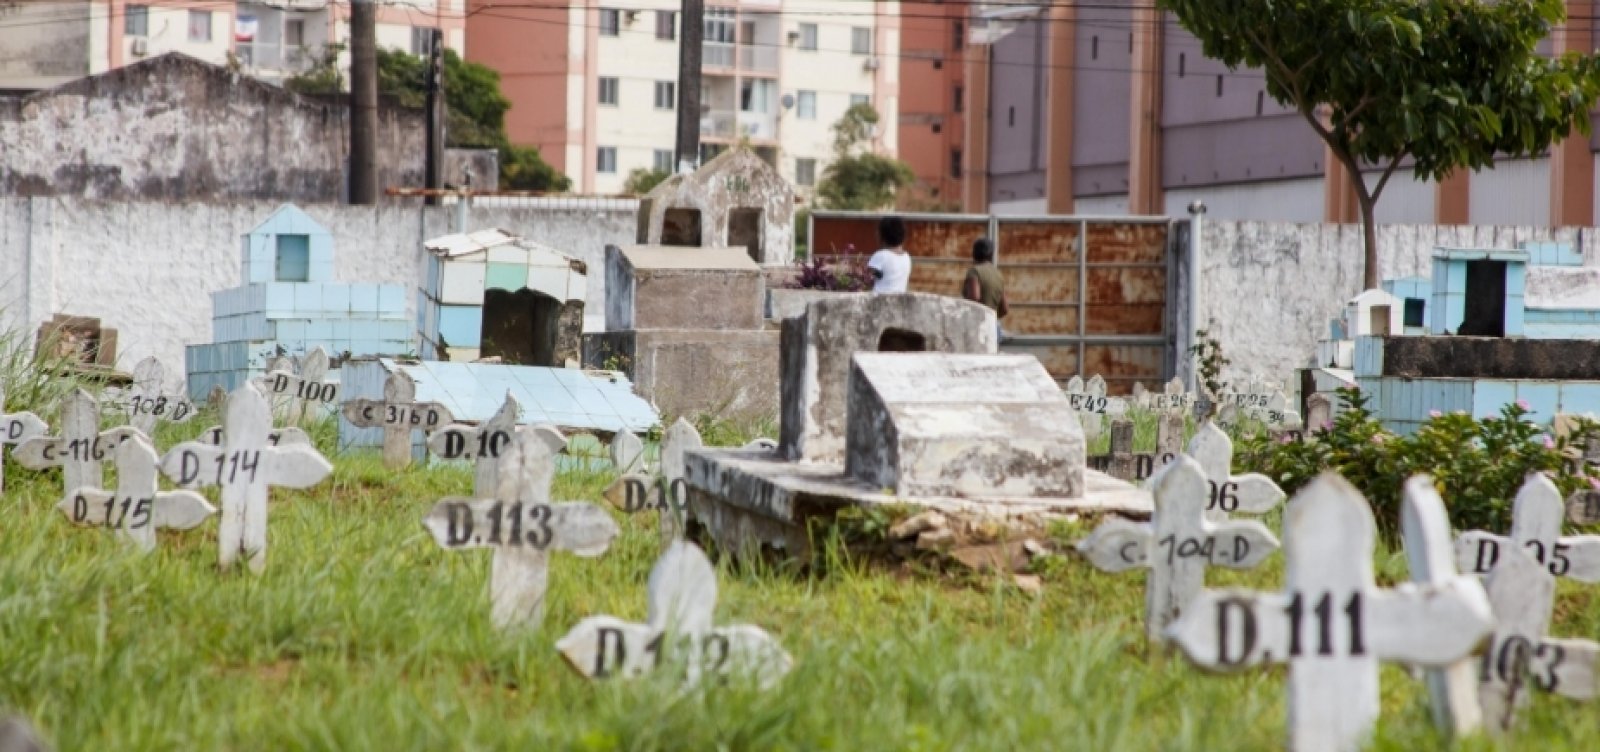 Bahia rompe a barreira de cinco mil mortes pelo coronavírus